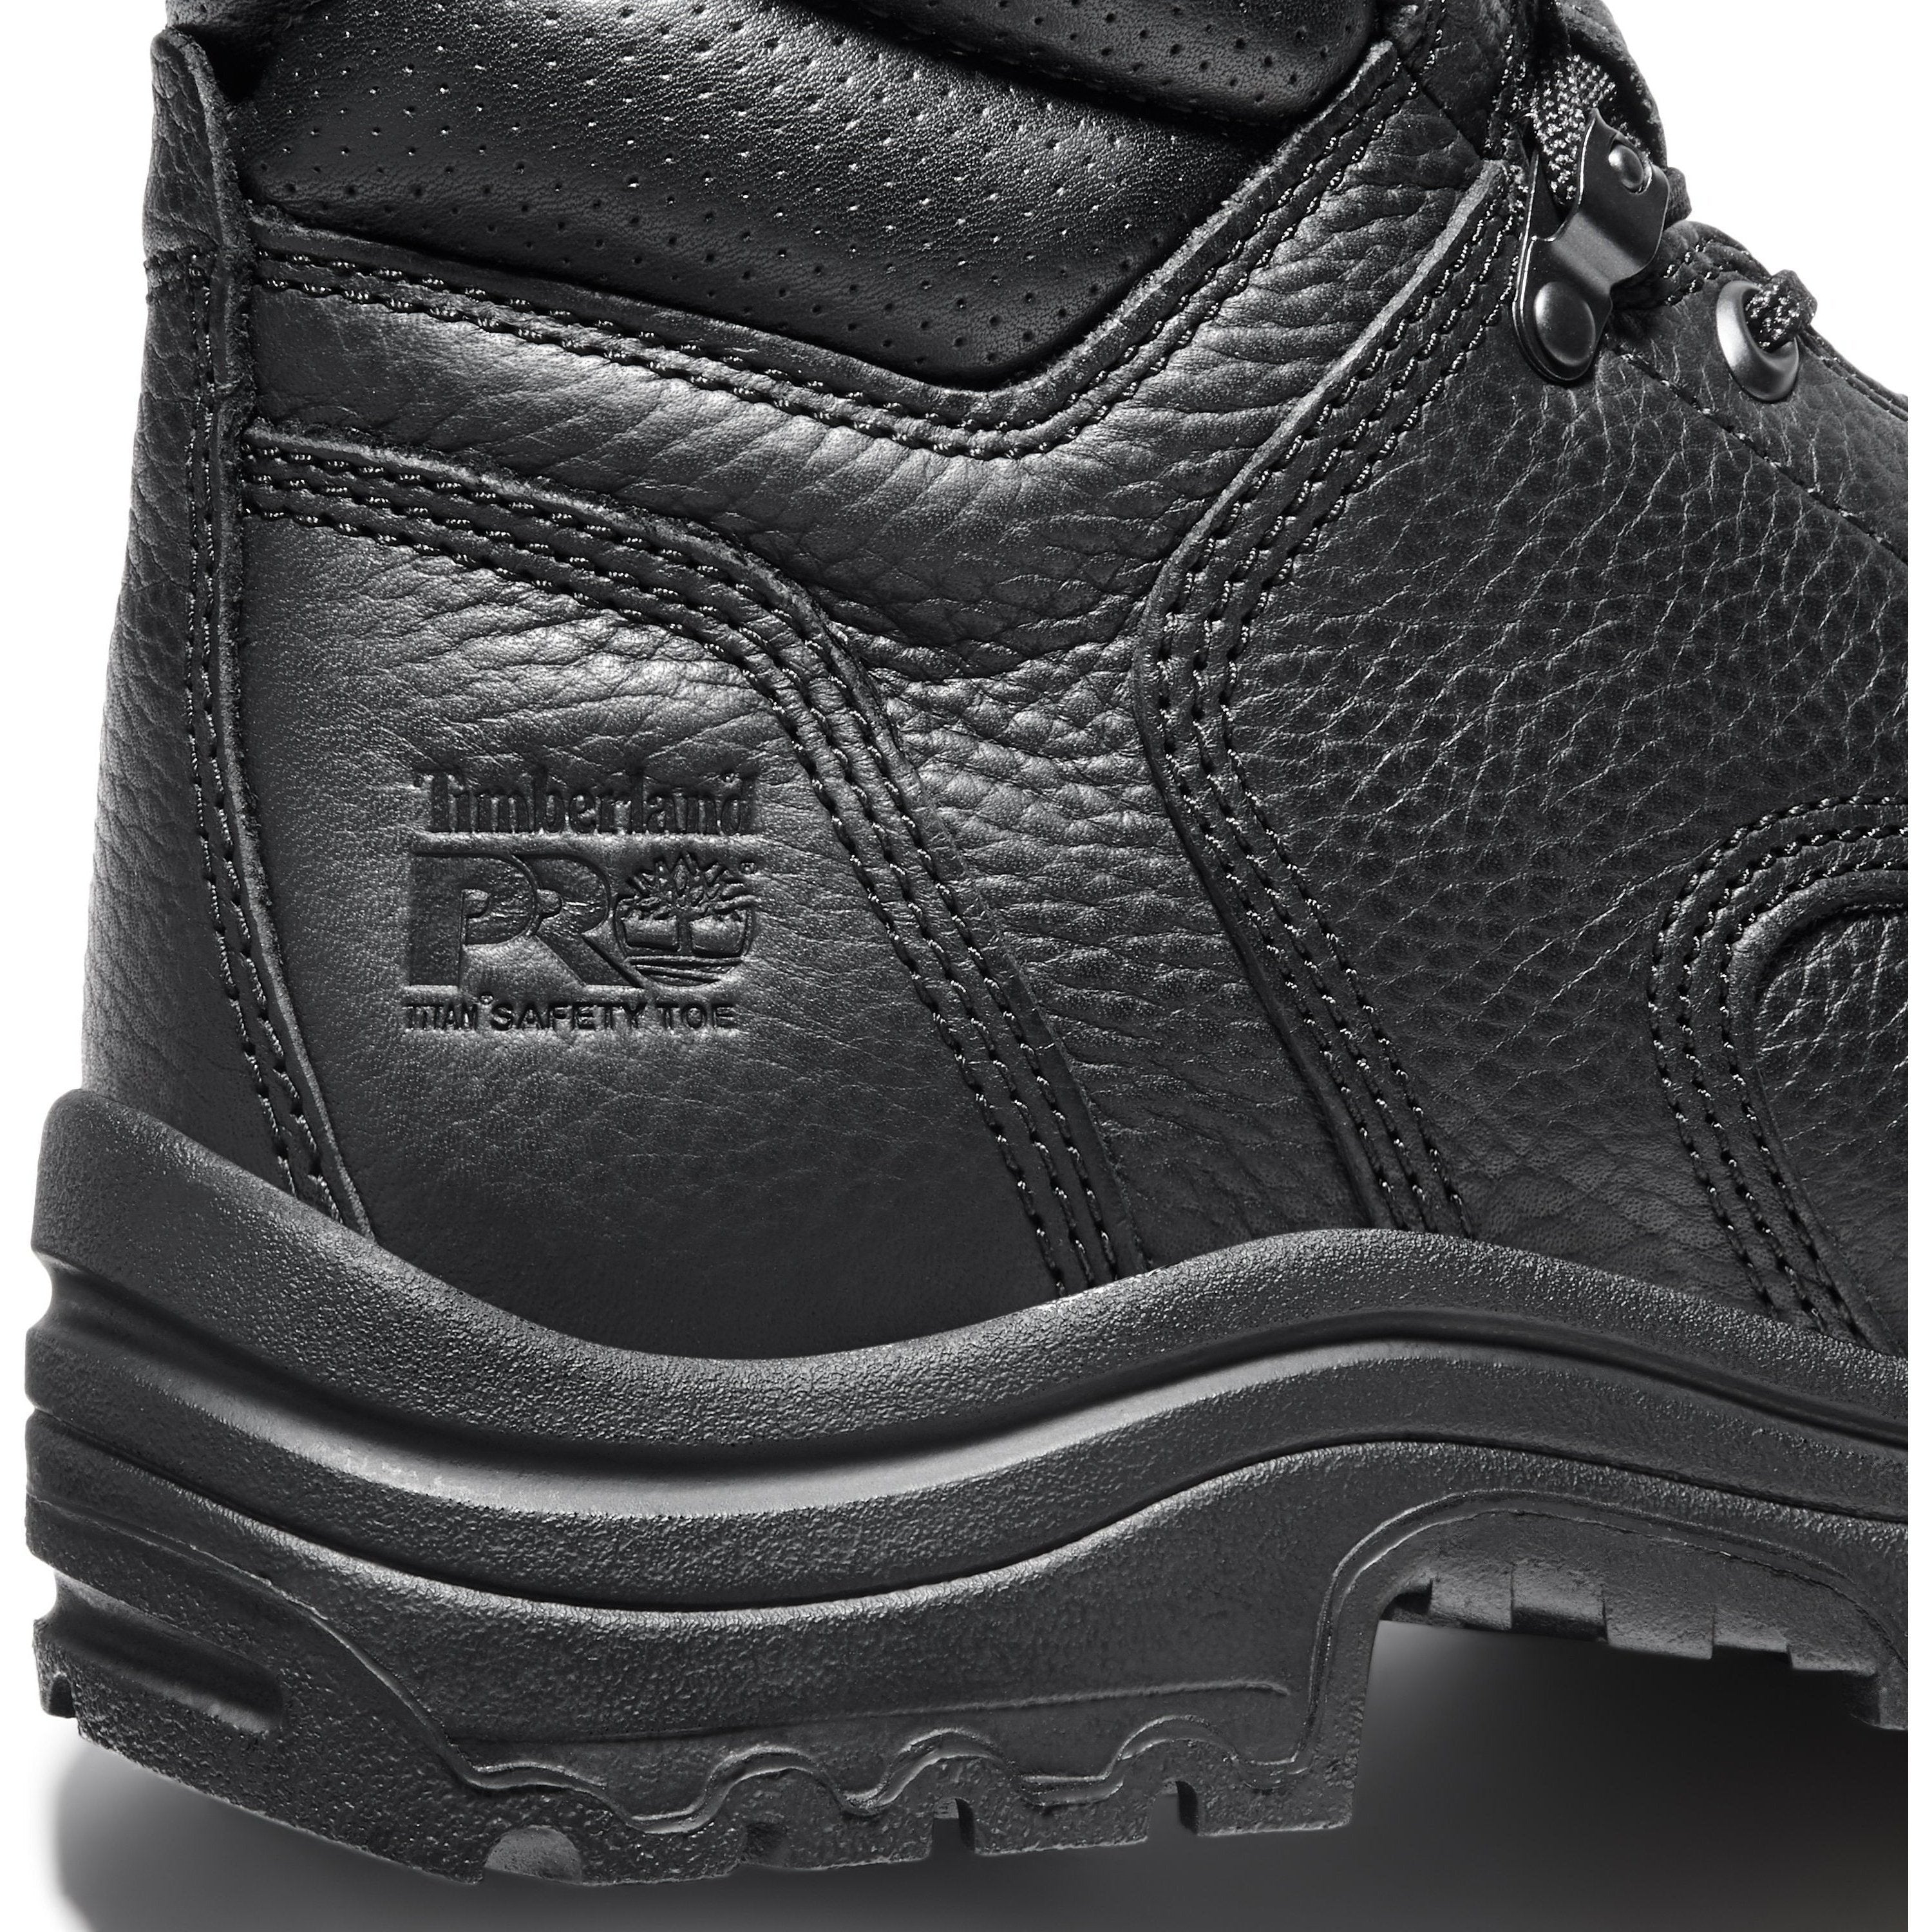 Timberland PRO Men's TiTAN 6" Alloy Toe Work Boot - Black- TB126064001  - Overlook Boots